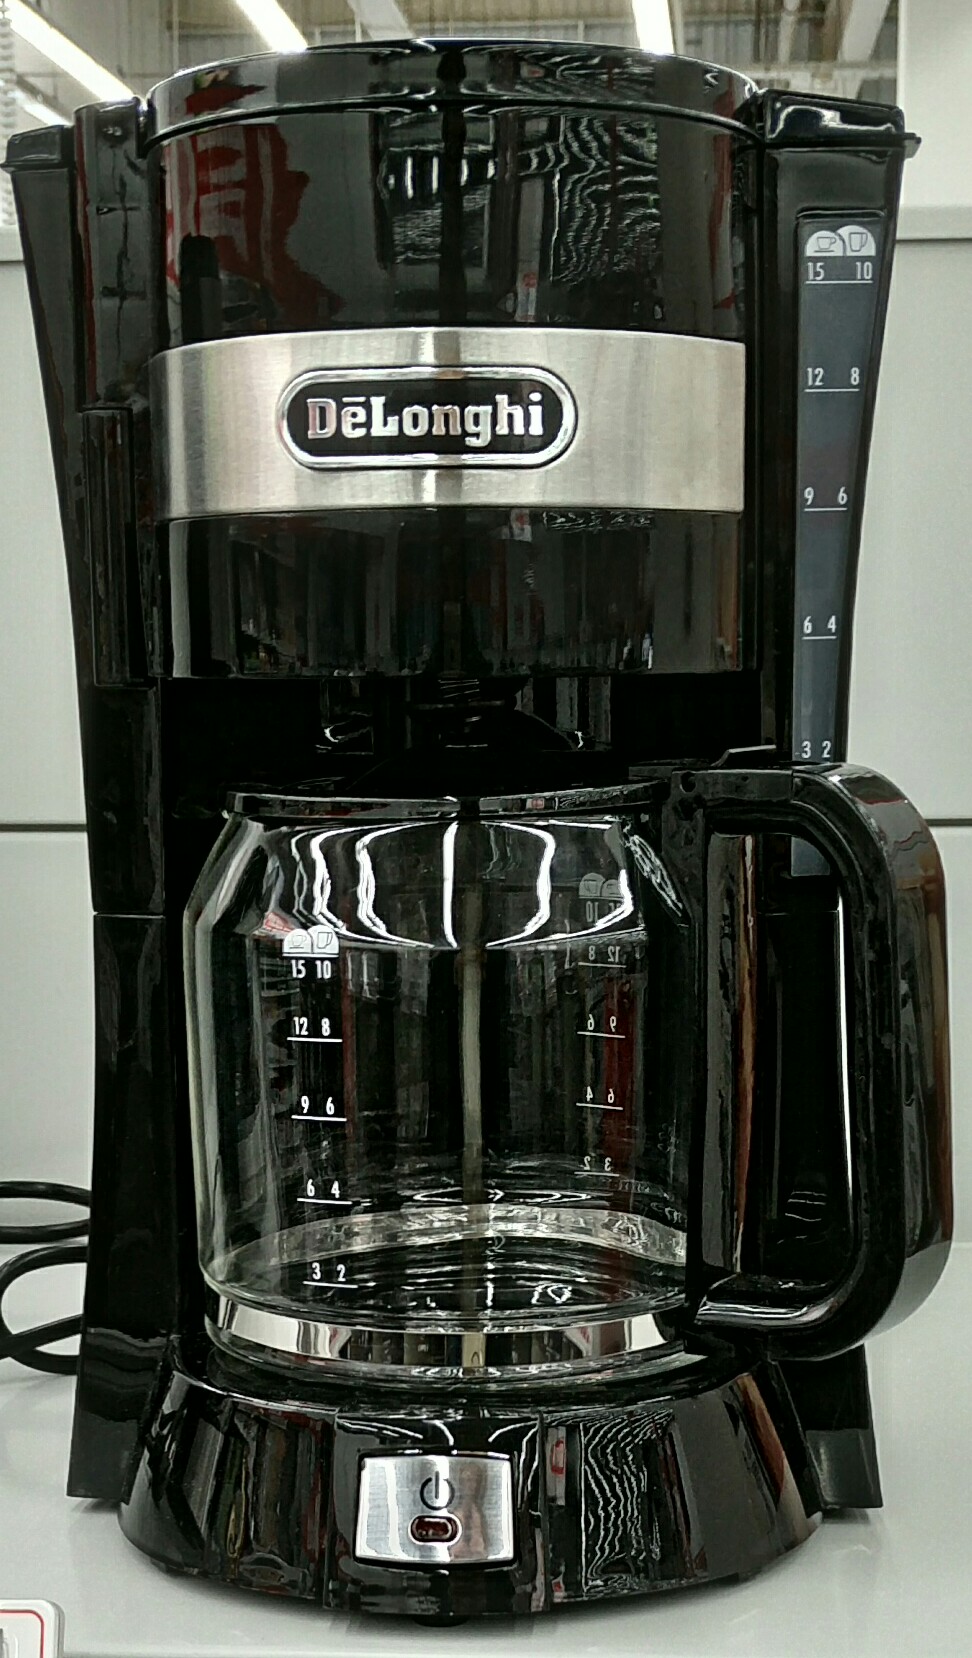 https://upload.wikimedia.org/wikipedia/commons/3/39/De_Longhi_coffee_machine.jpg